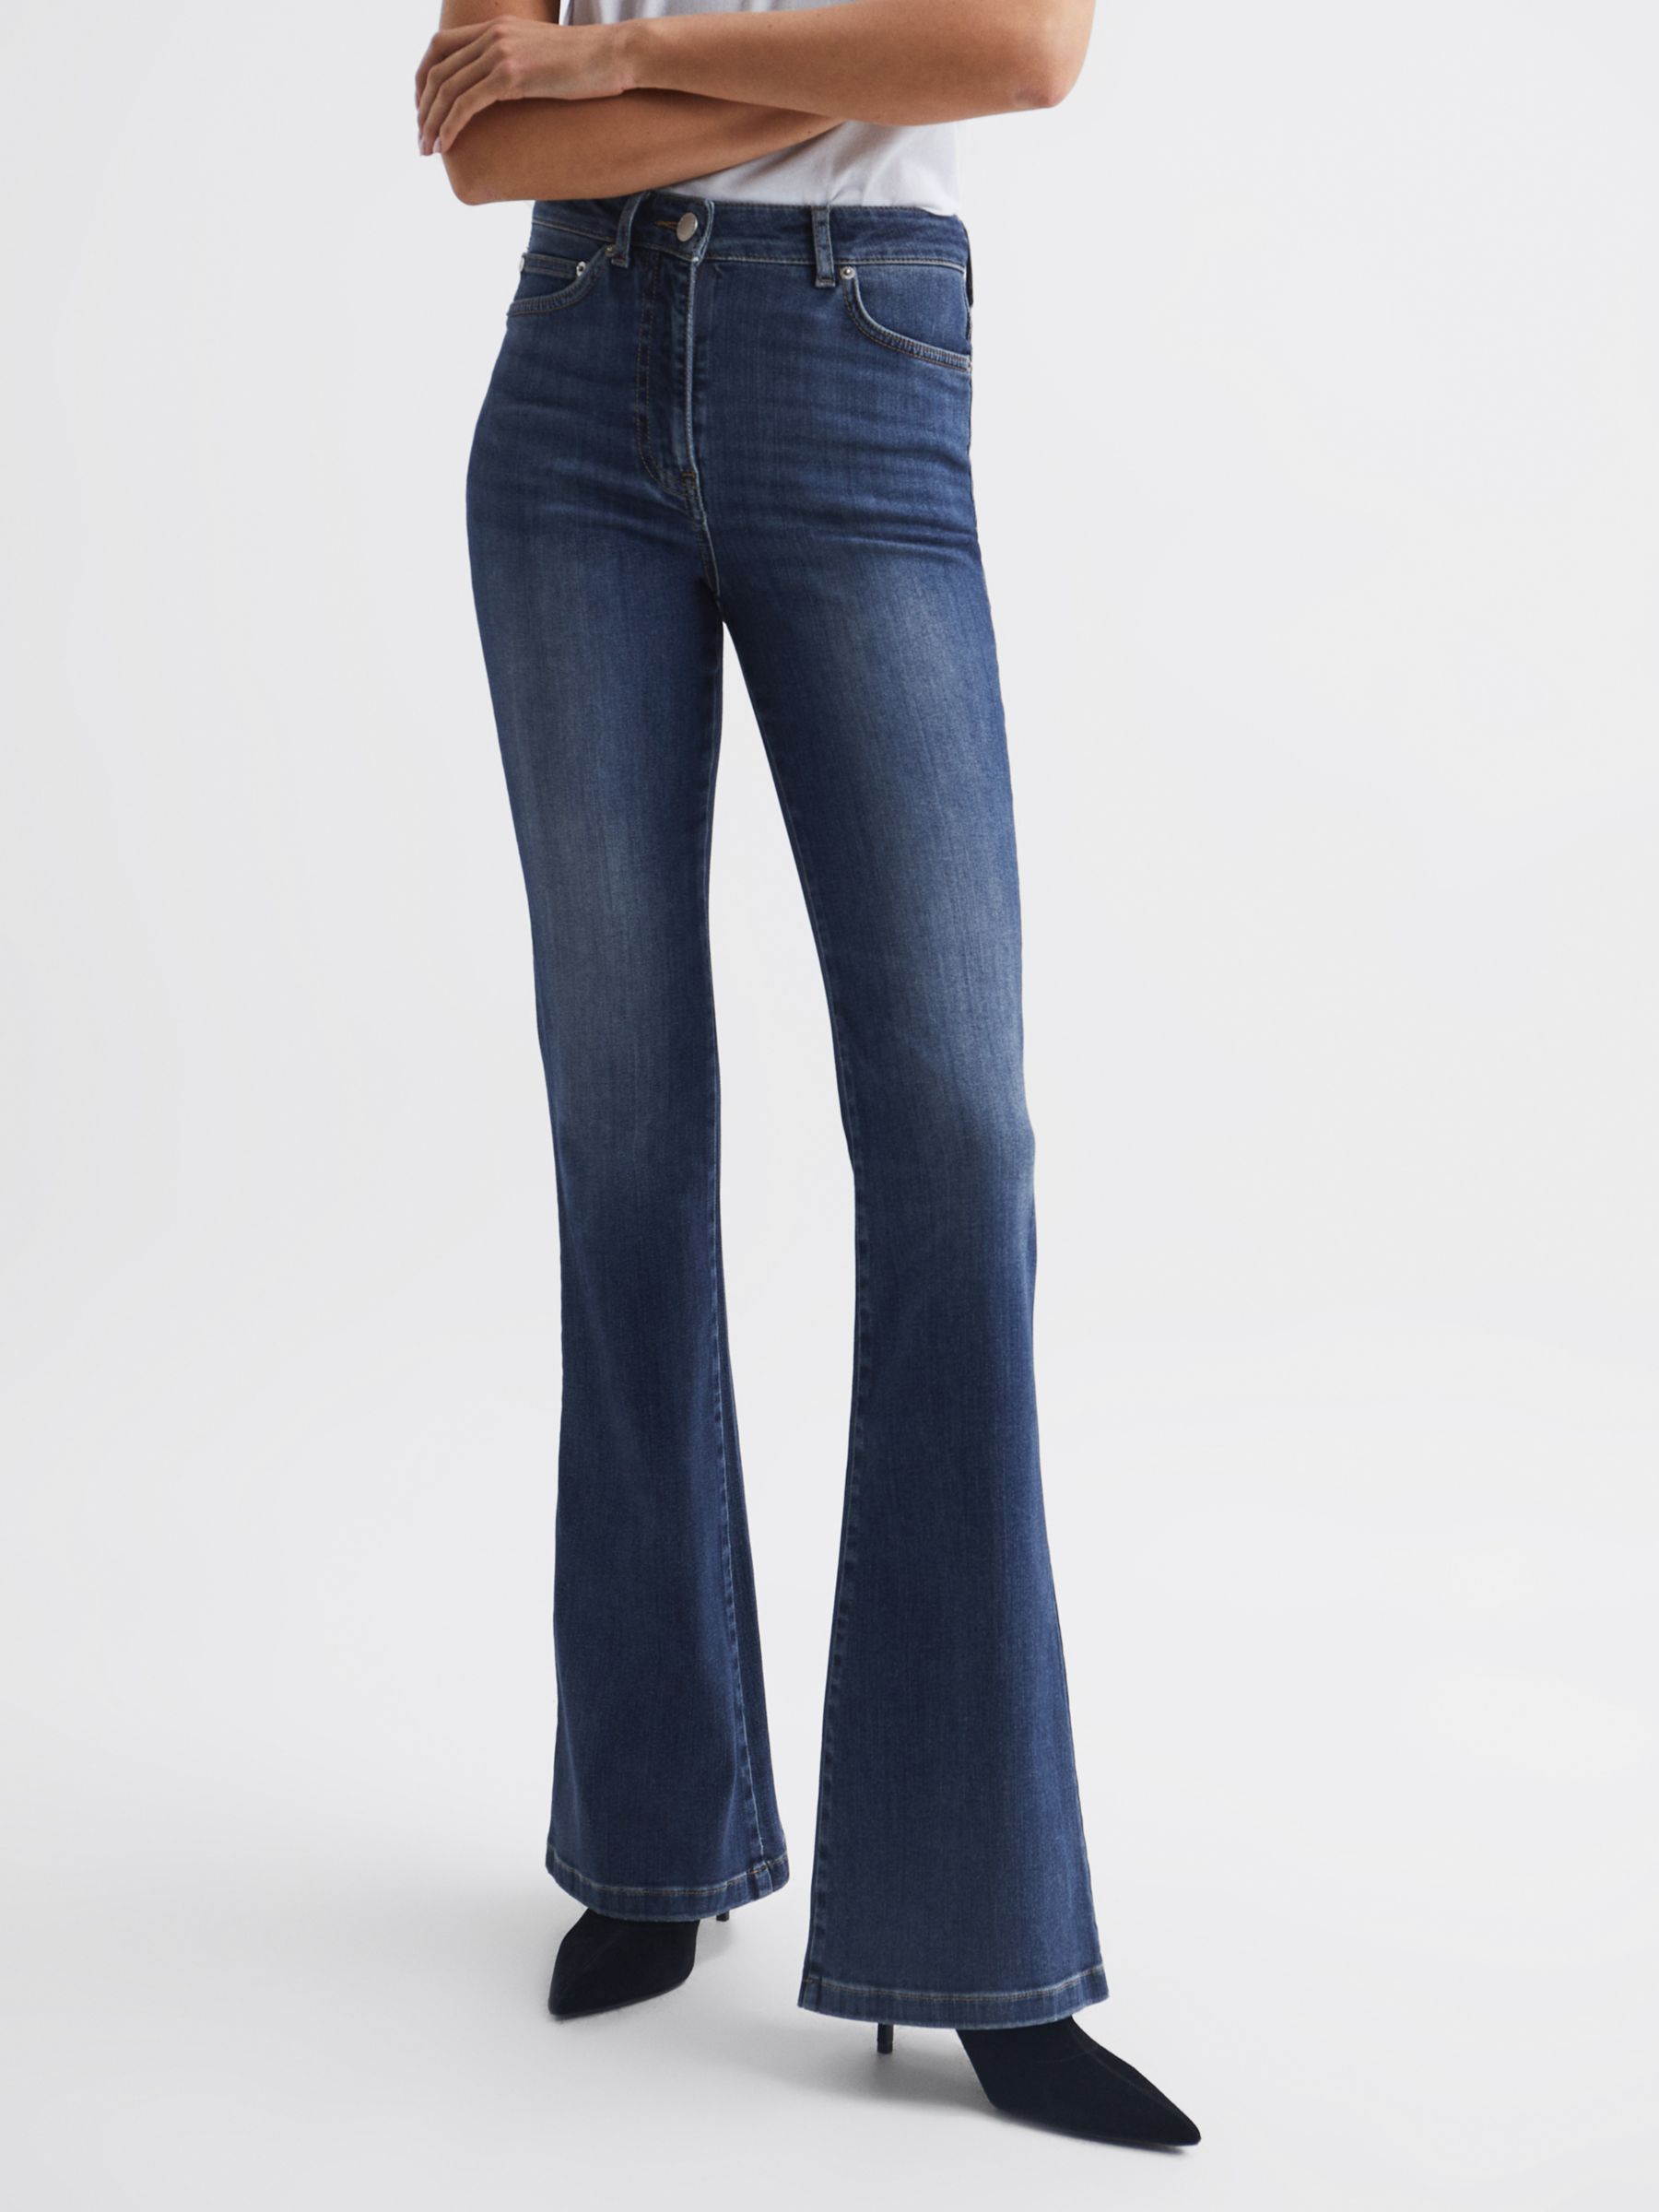 REISS Women's High Rise Skinny Flared Stretchy Denim Jeans Dark